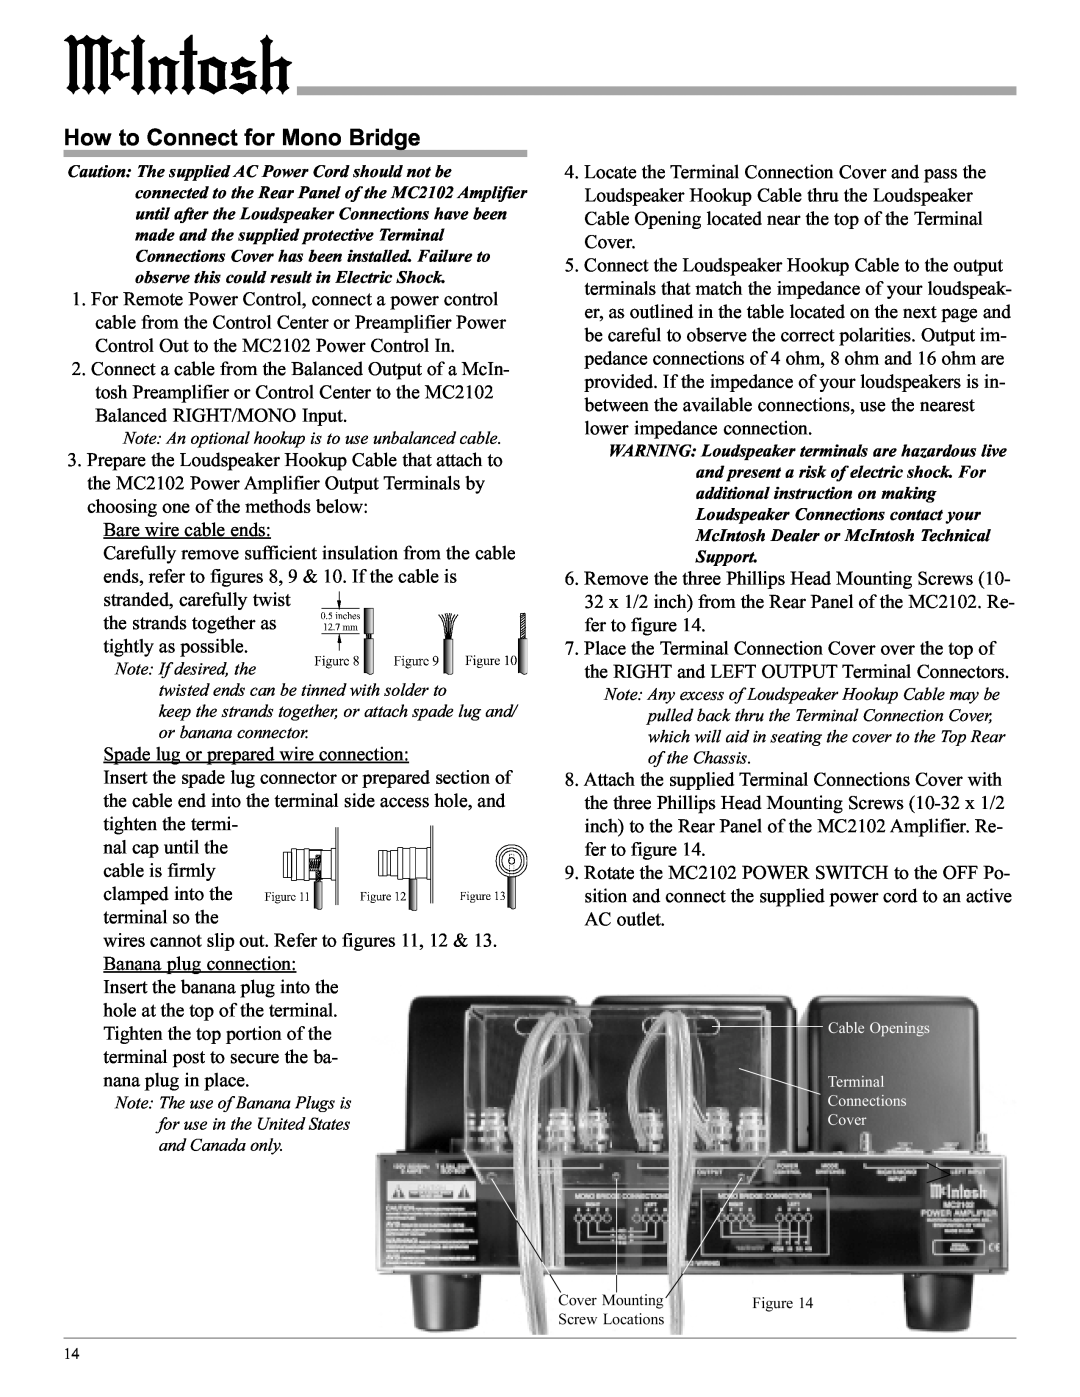 McIntosh MC2102 manual How to Connect for Mono Bridge 